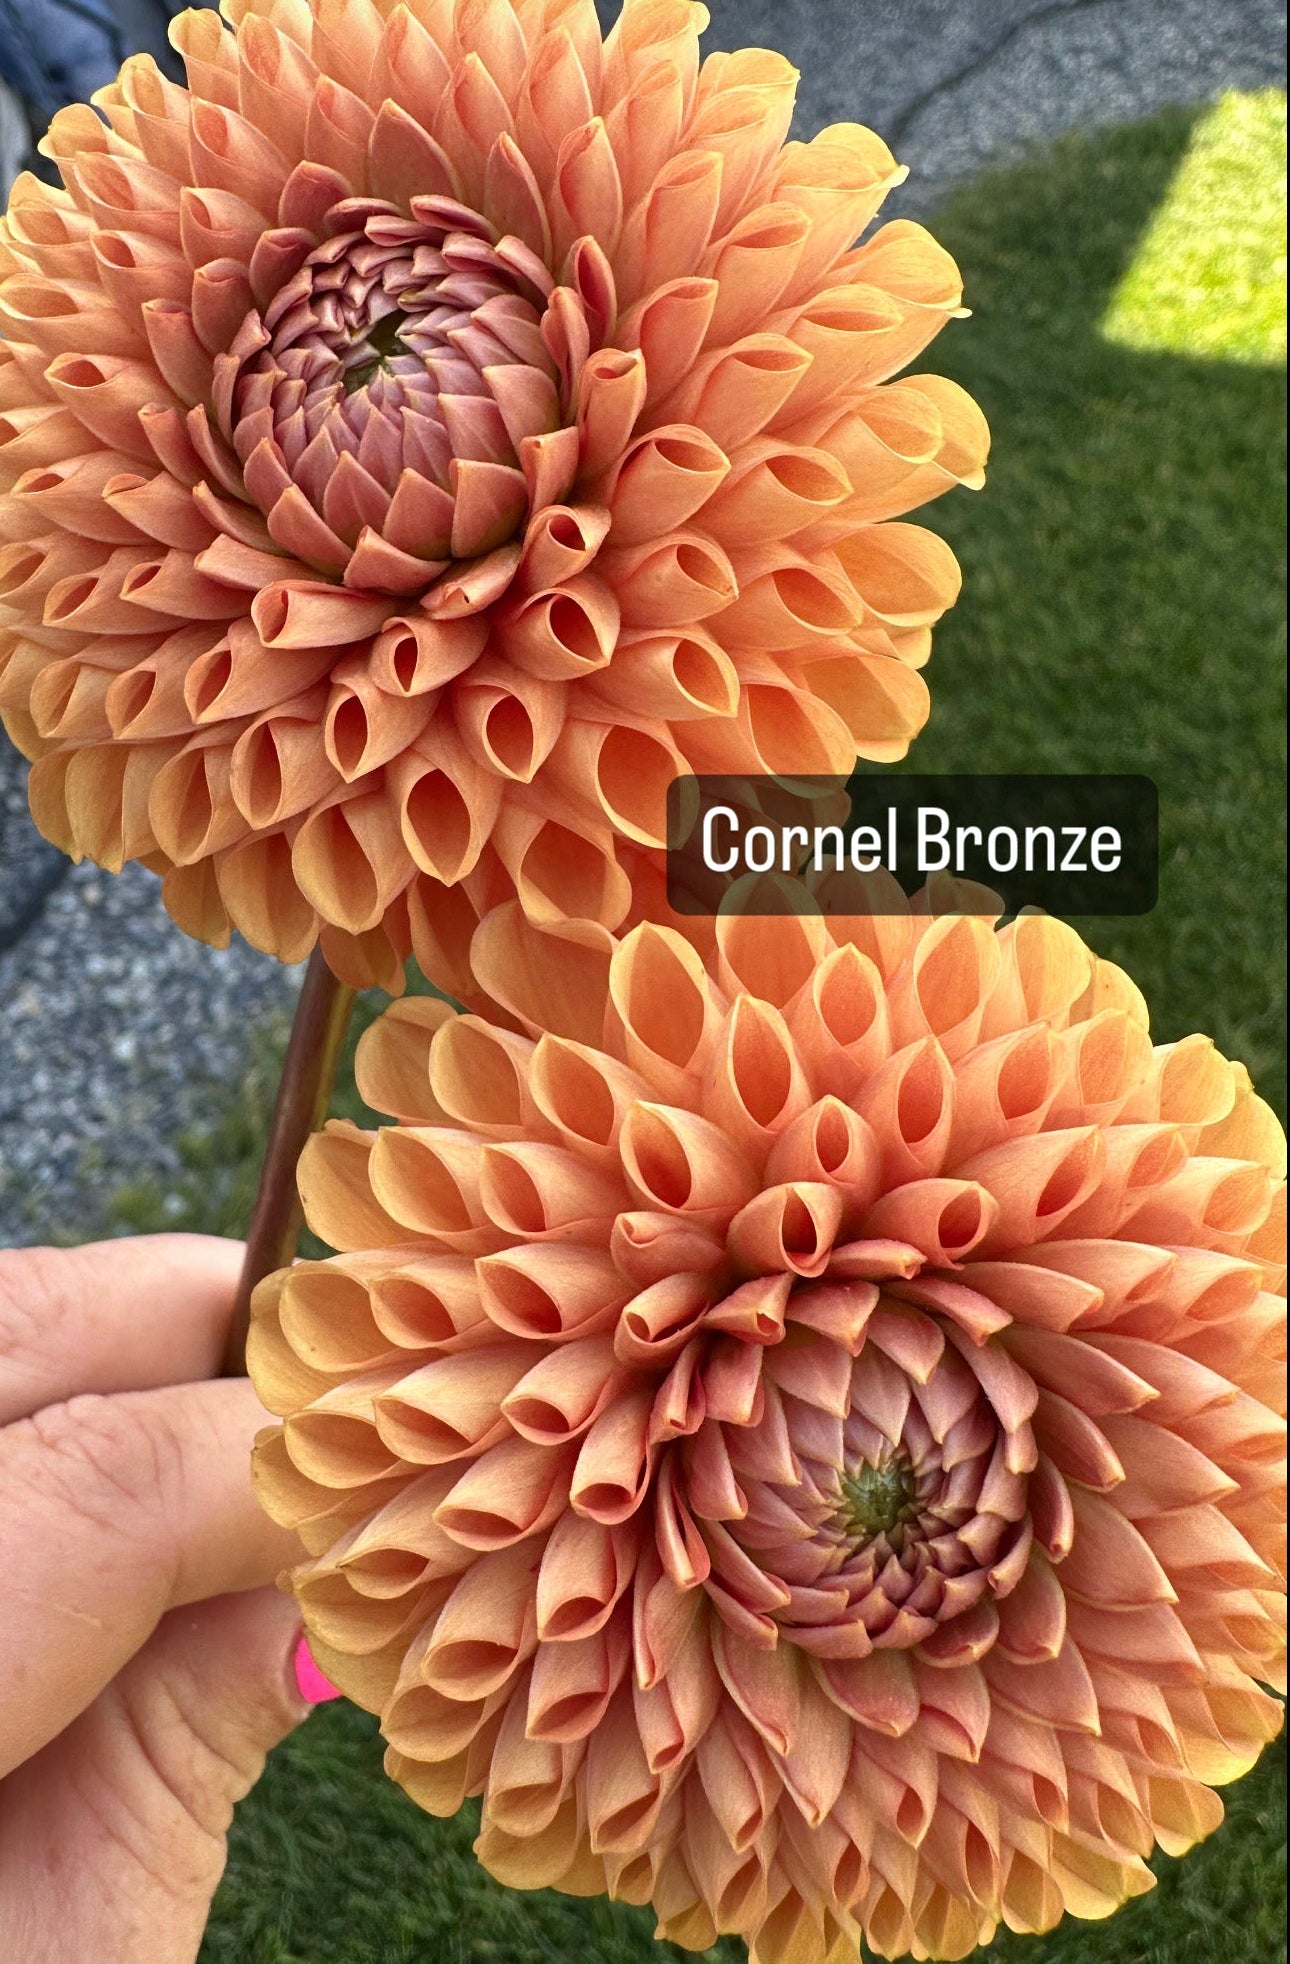 Cornel Bronze